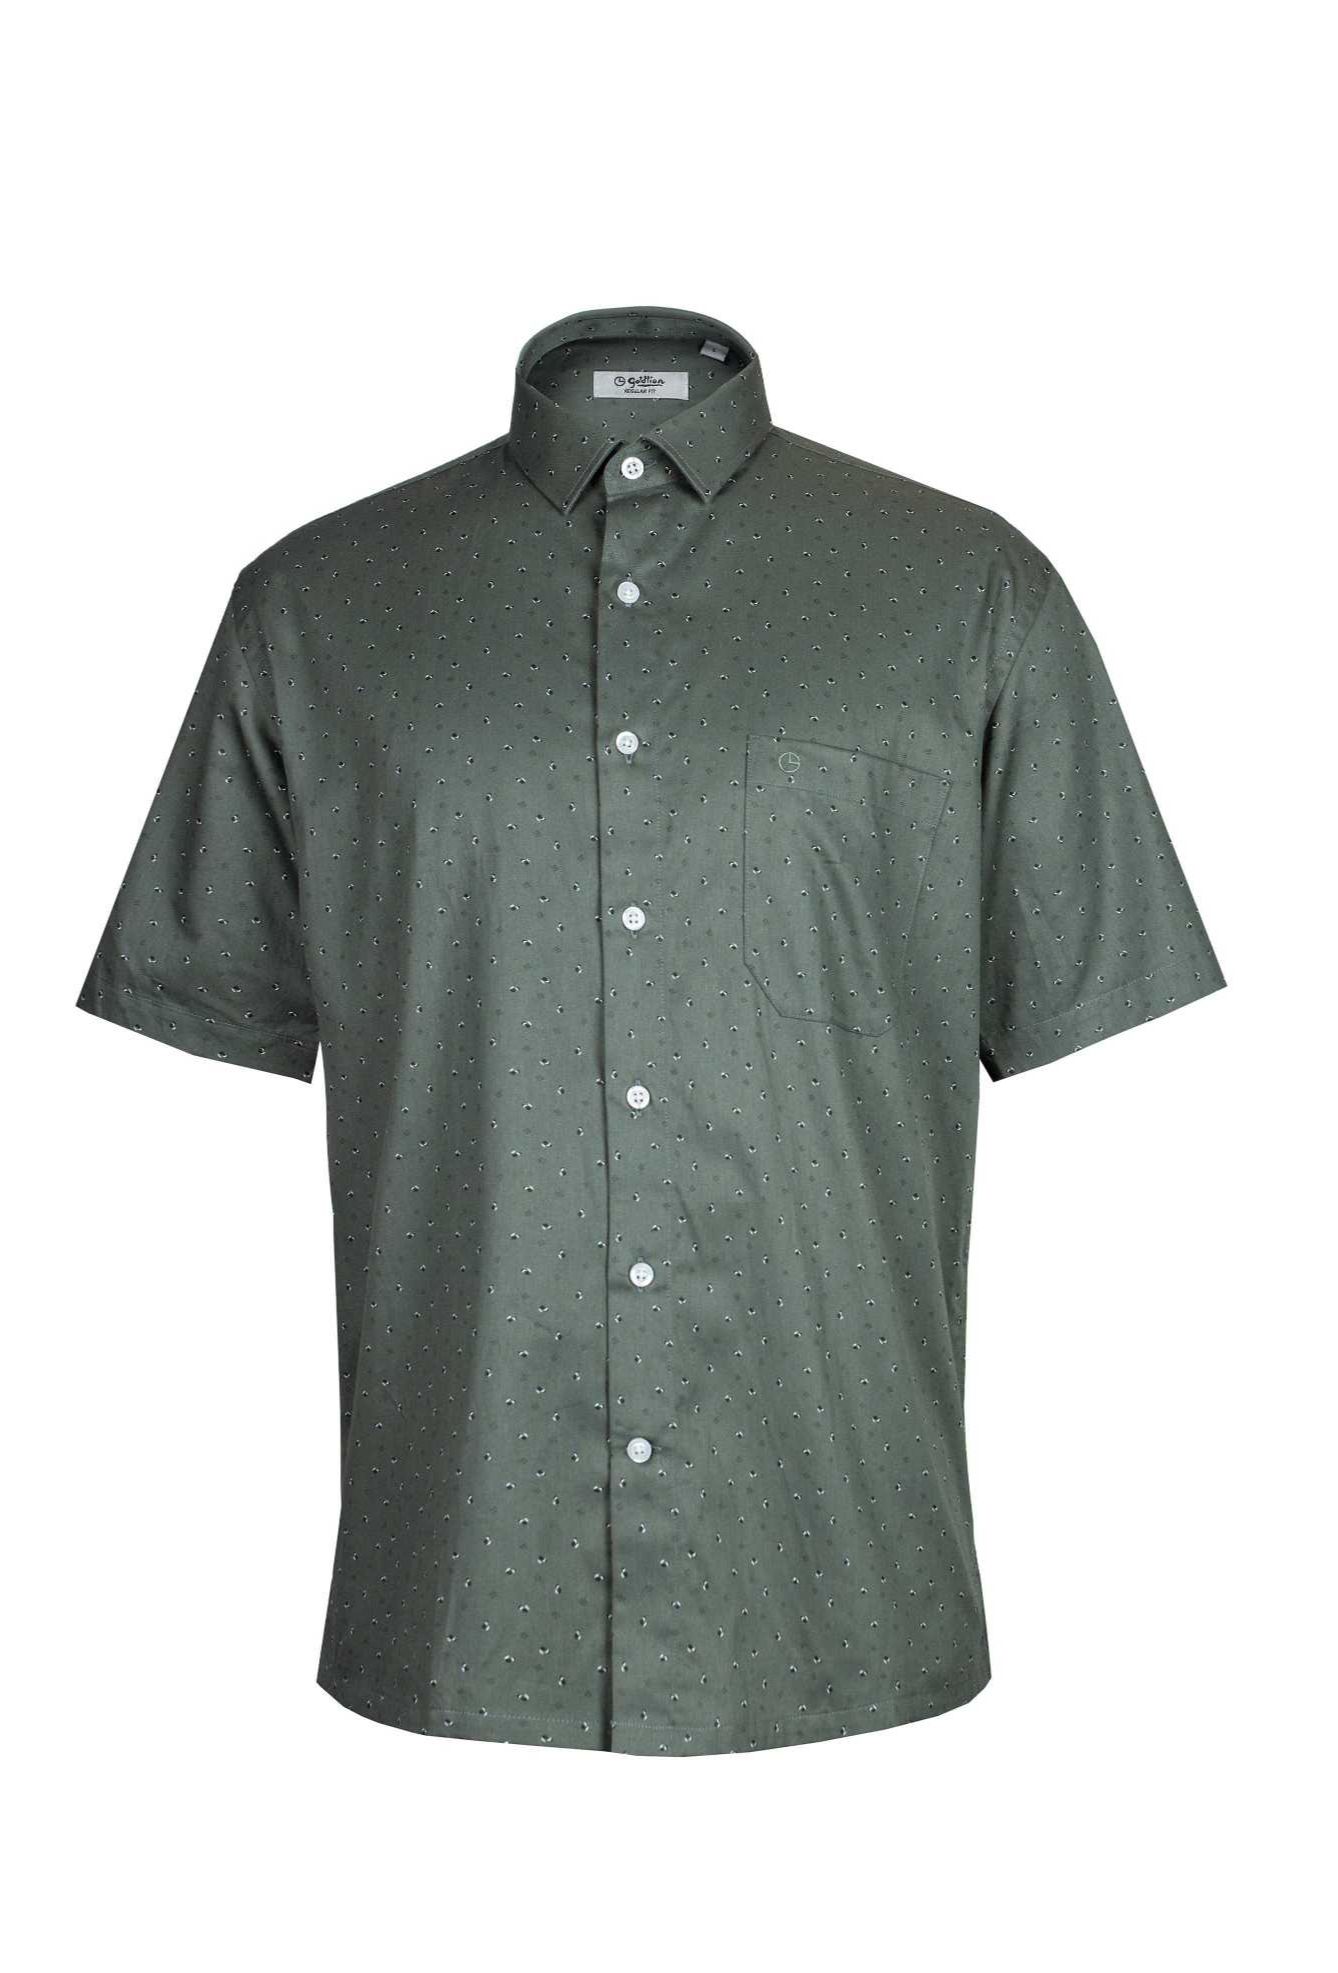 Goldlion Smart Casual Regular Fit 100% Cotton Short-Sleeved Shirt